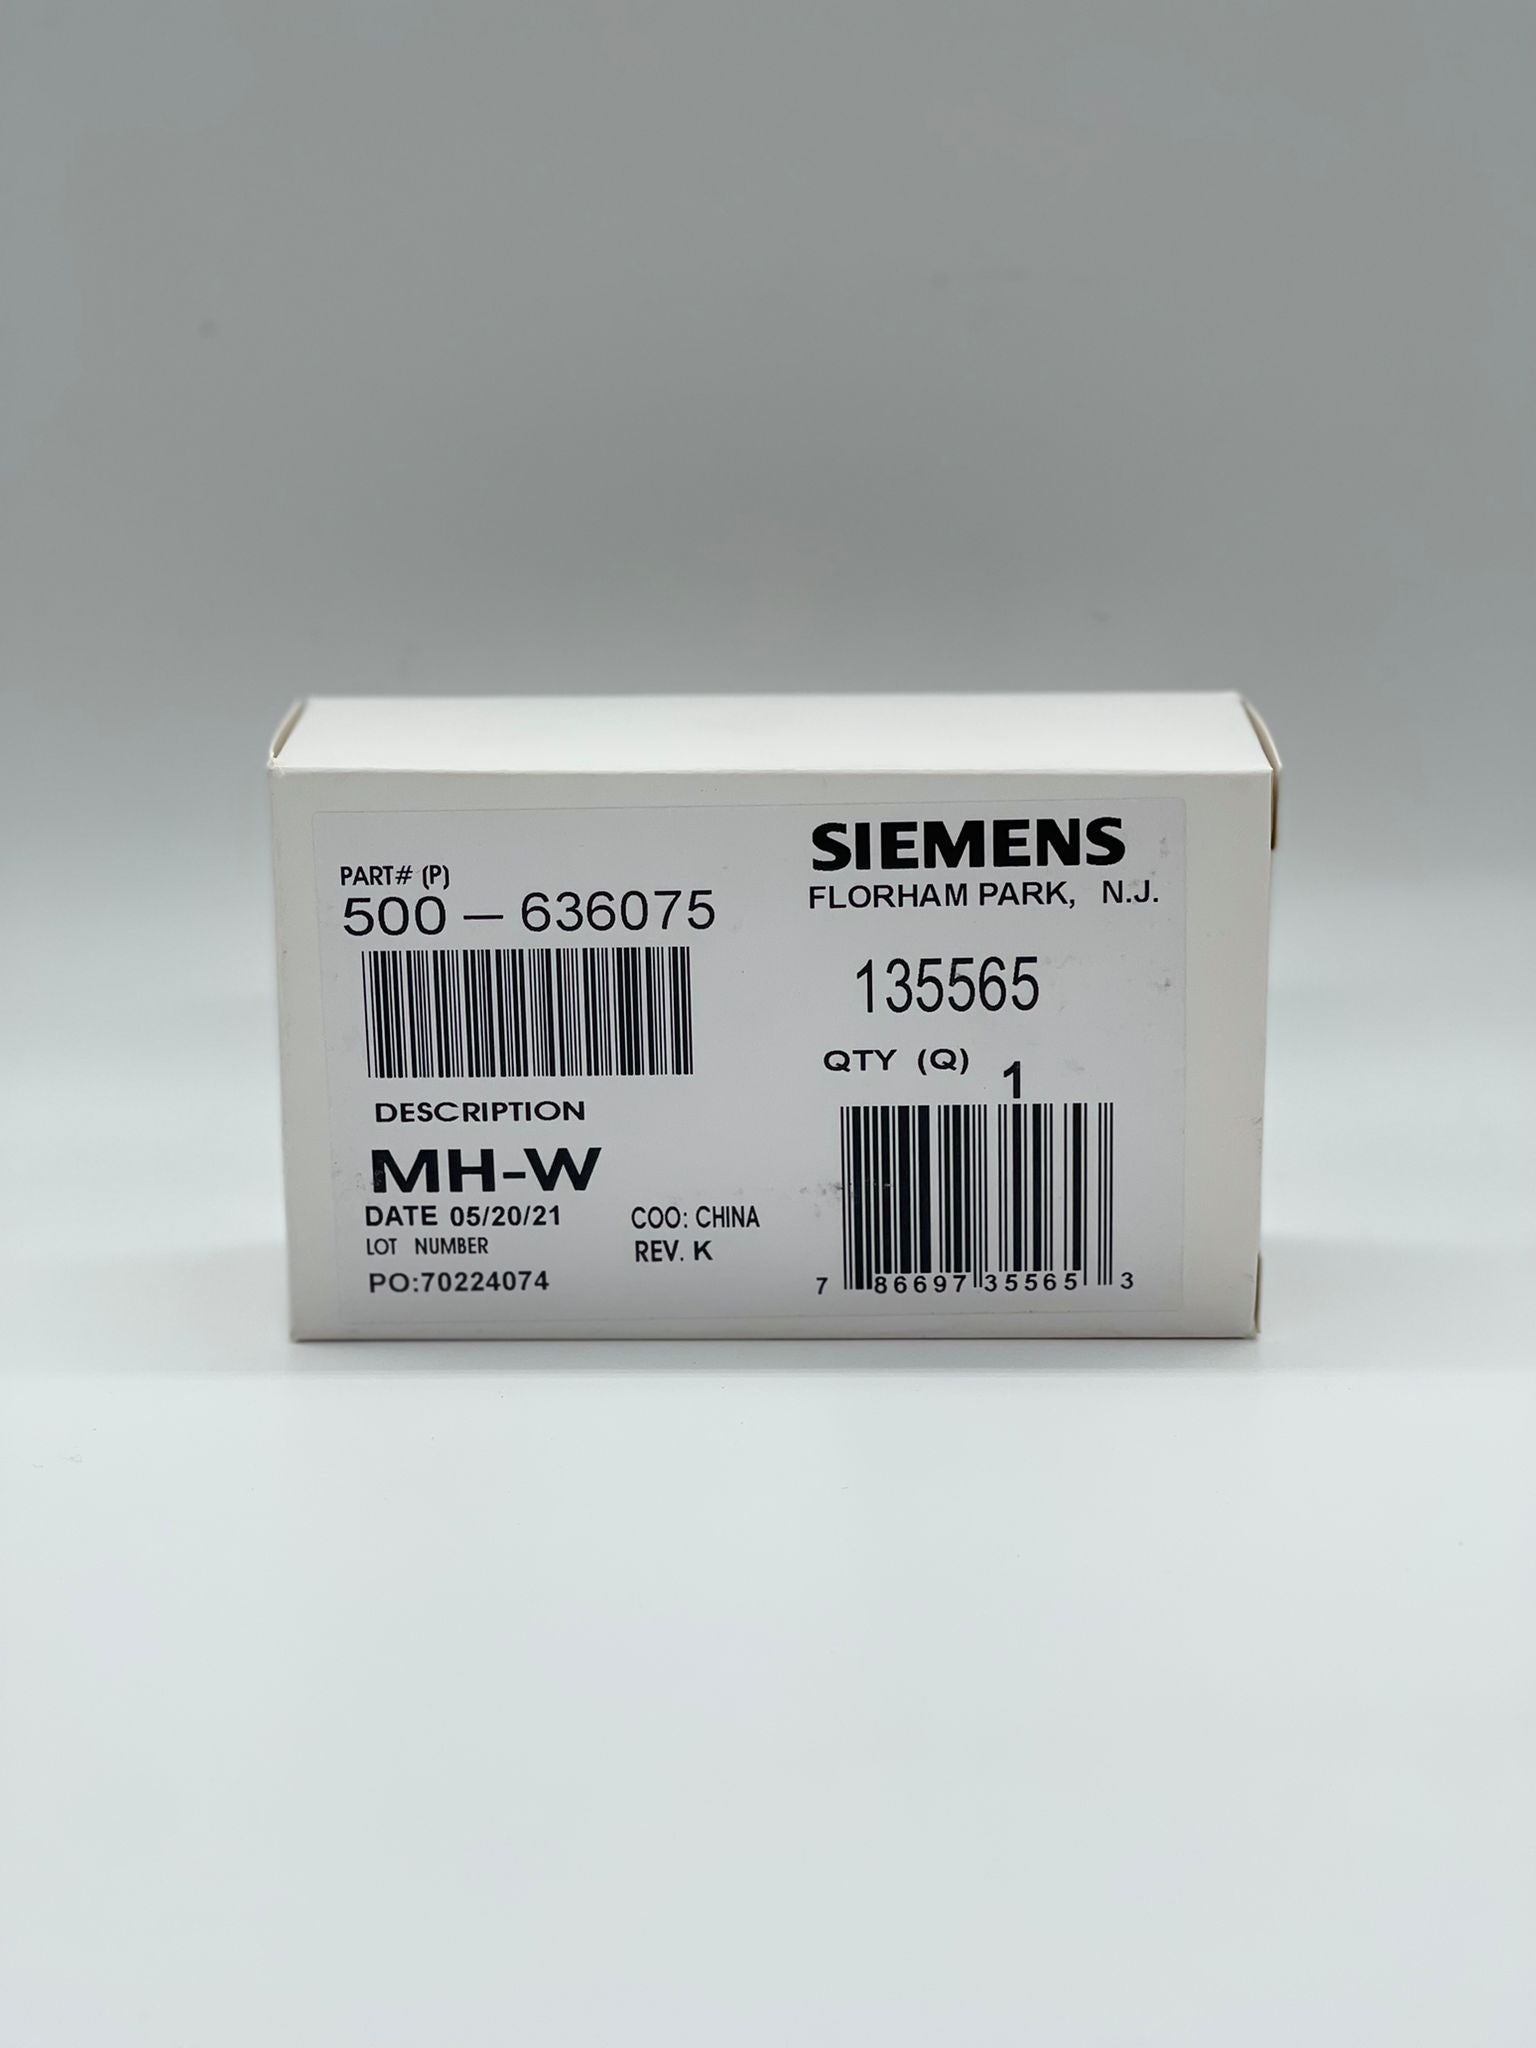 Siemens MH-W - The Fire Alarm Supplier